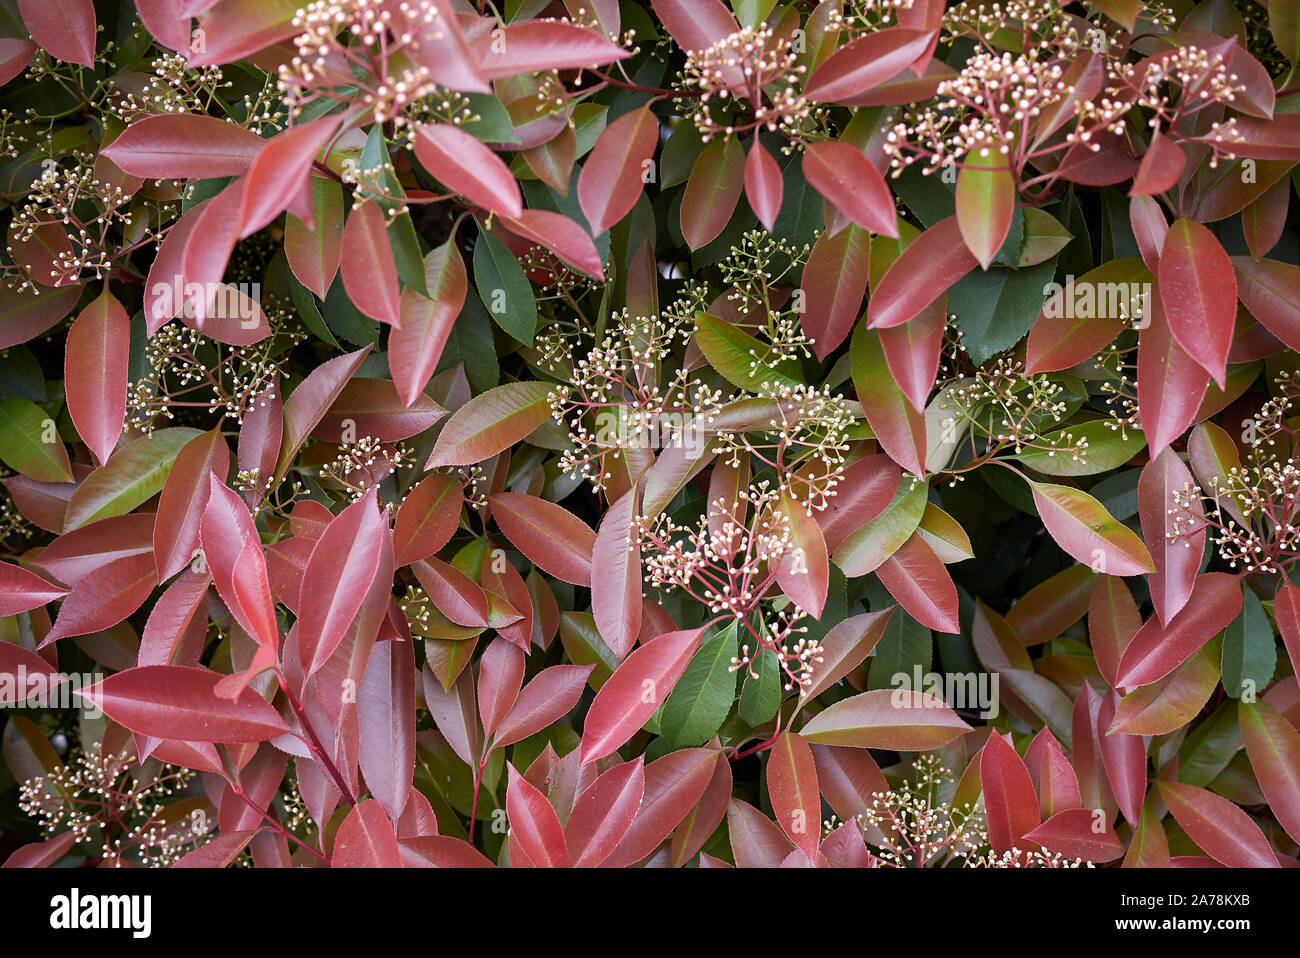 colorful foliage of Photinia shrub Stock Photo